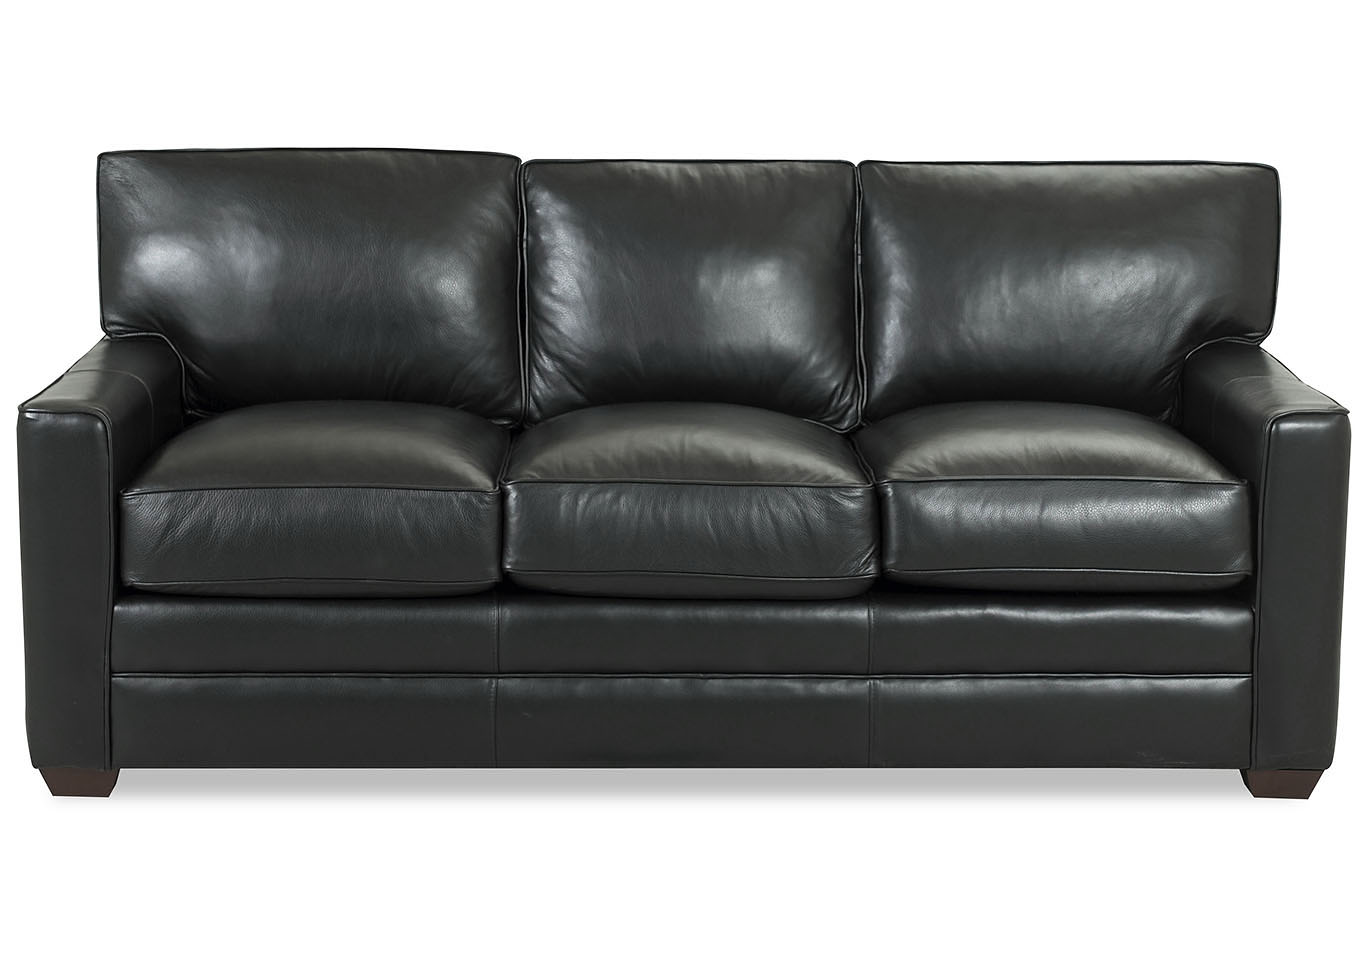 Pantego Black Leather Stationary Sofa,Klaussner Home Furnishings